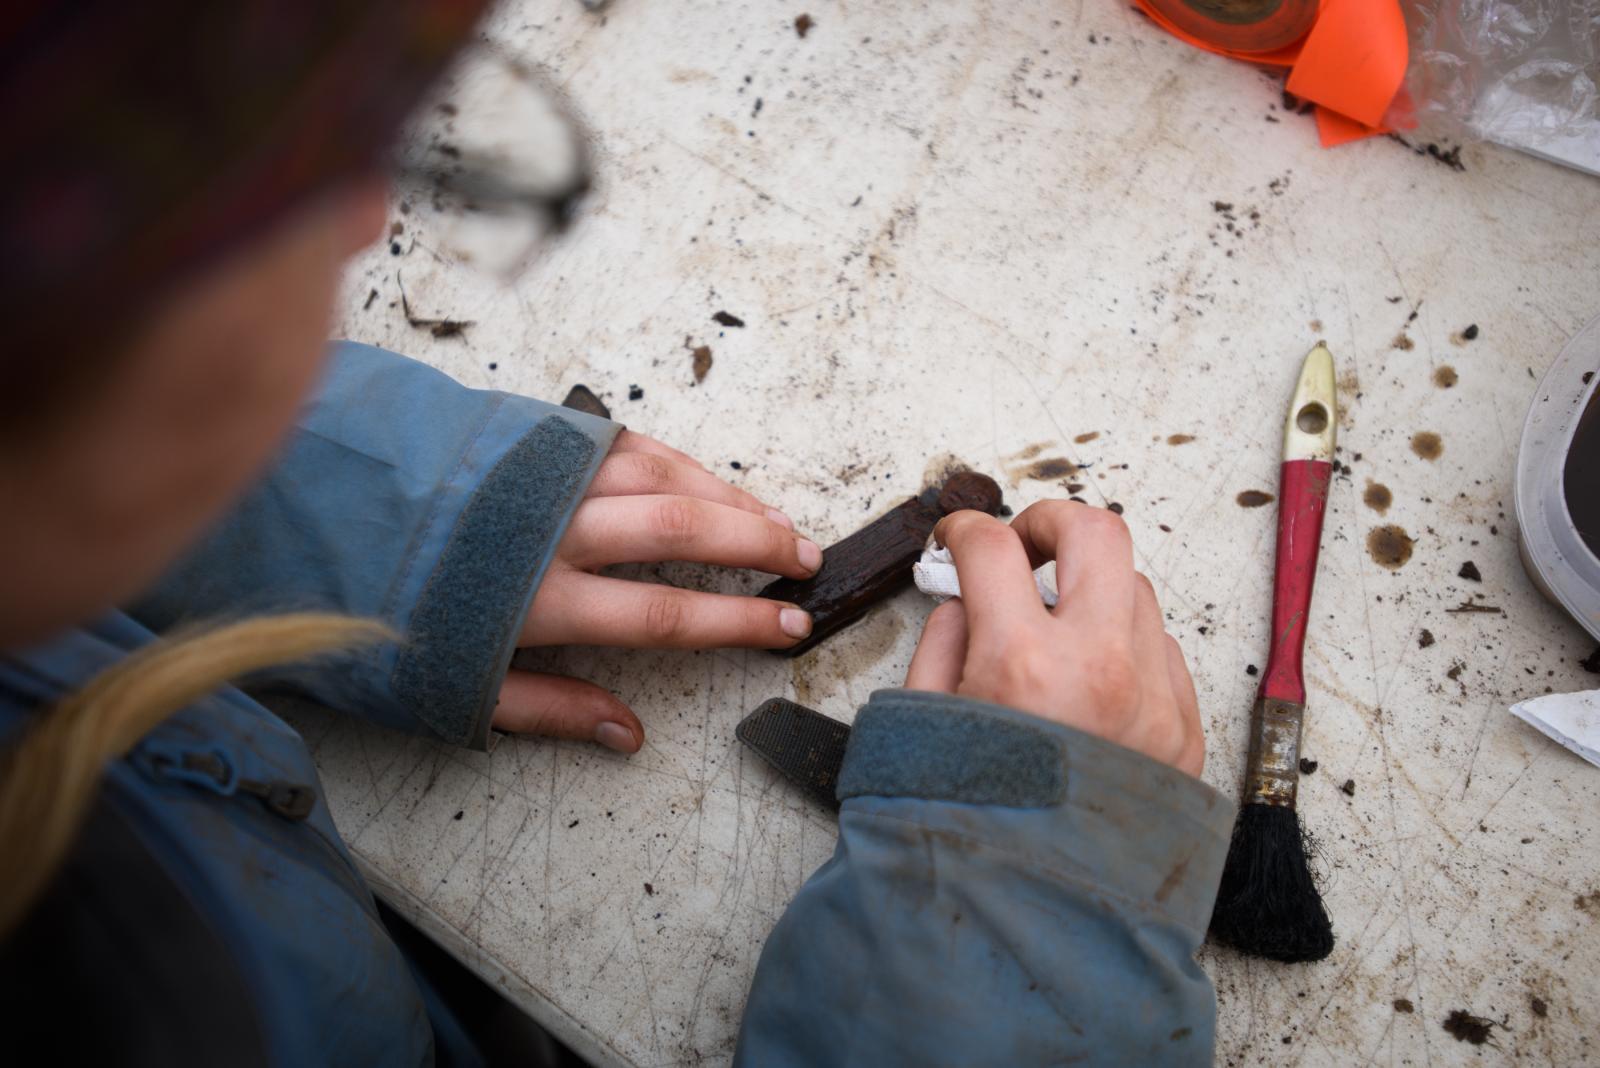 Archeology student Lauren Phillips cleans a wooden doll found at the Nunalleq site near Quinhagak...